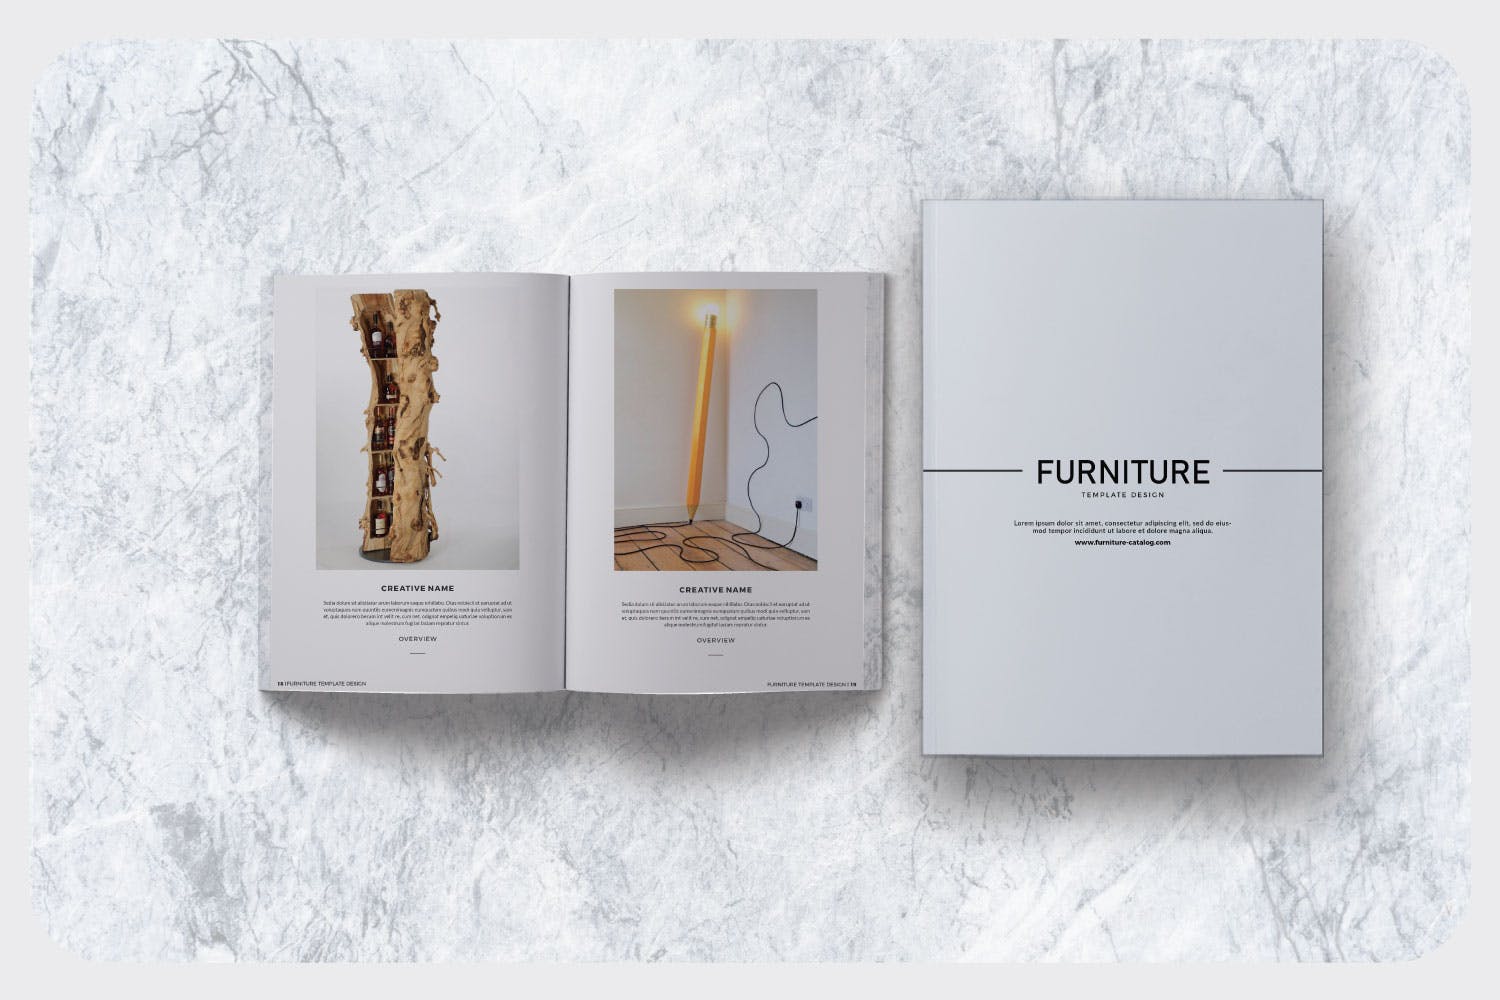 现代家具品牌产品画册Lookbook排版设计模板 Furniture Collection Lookbook插图(5)